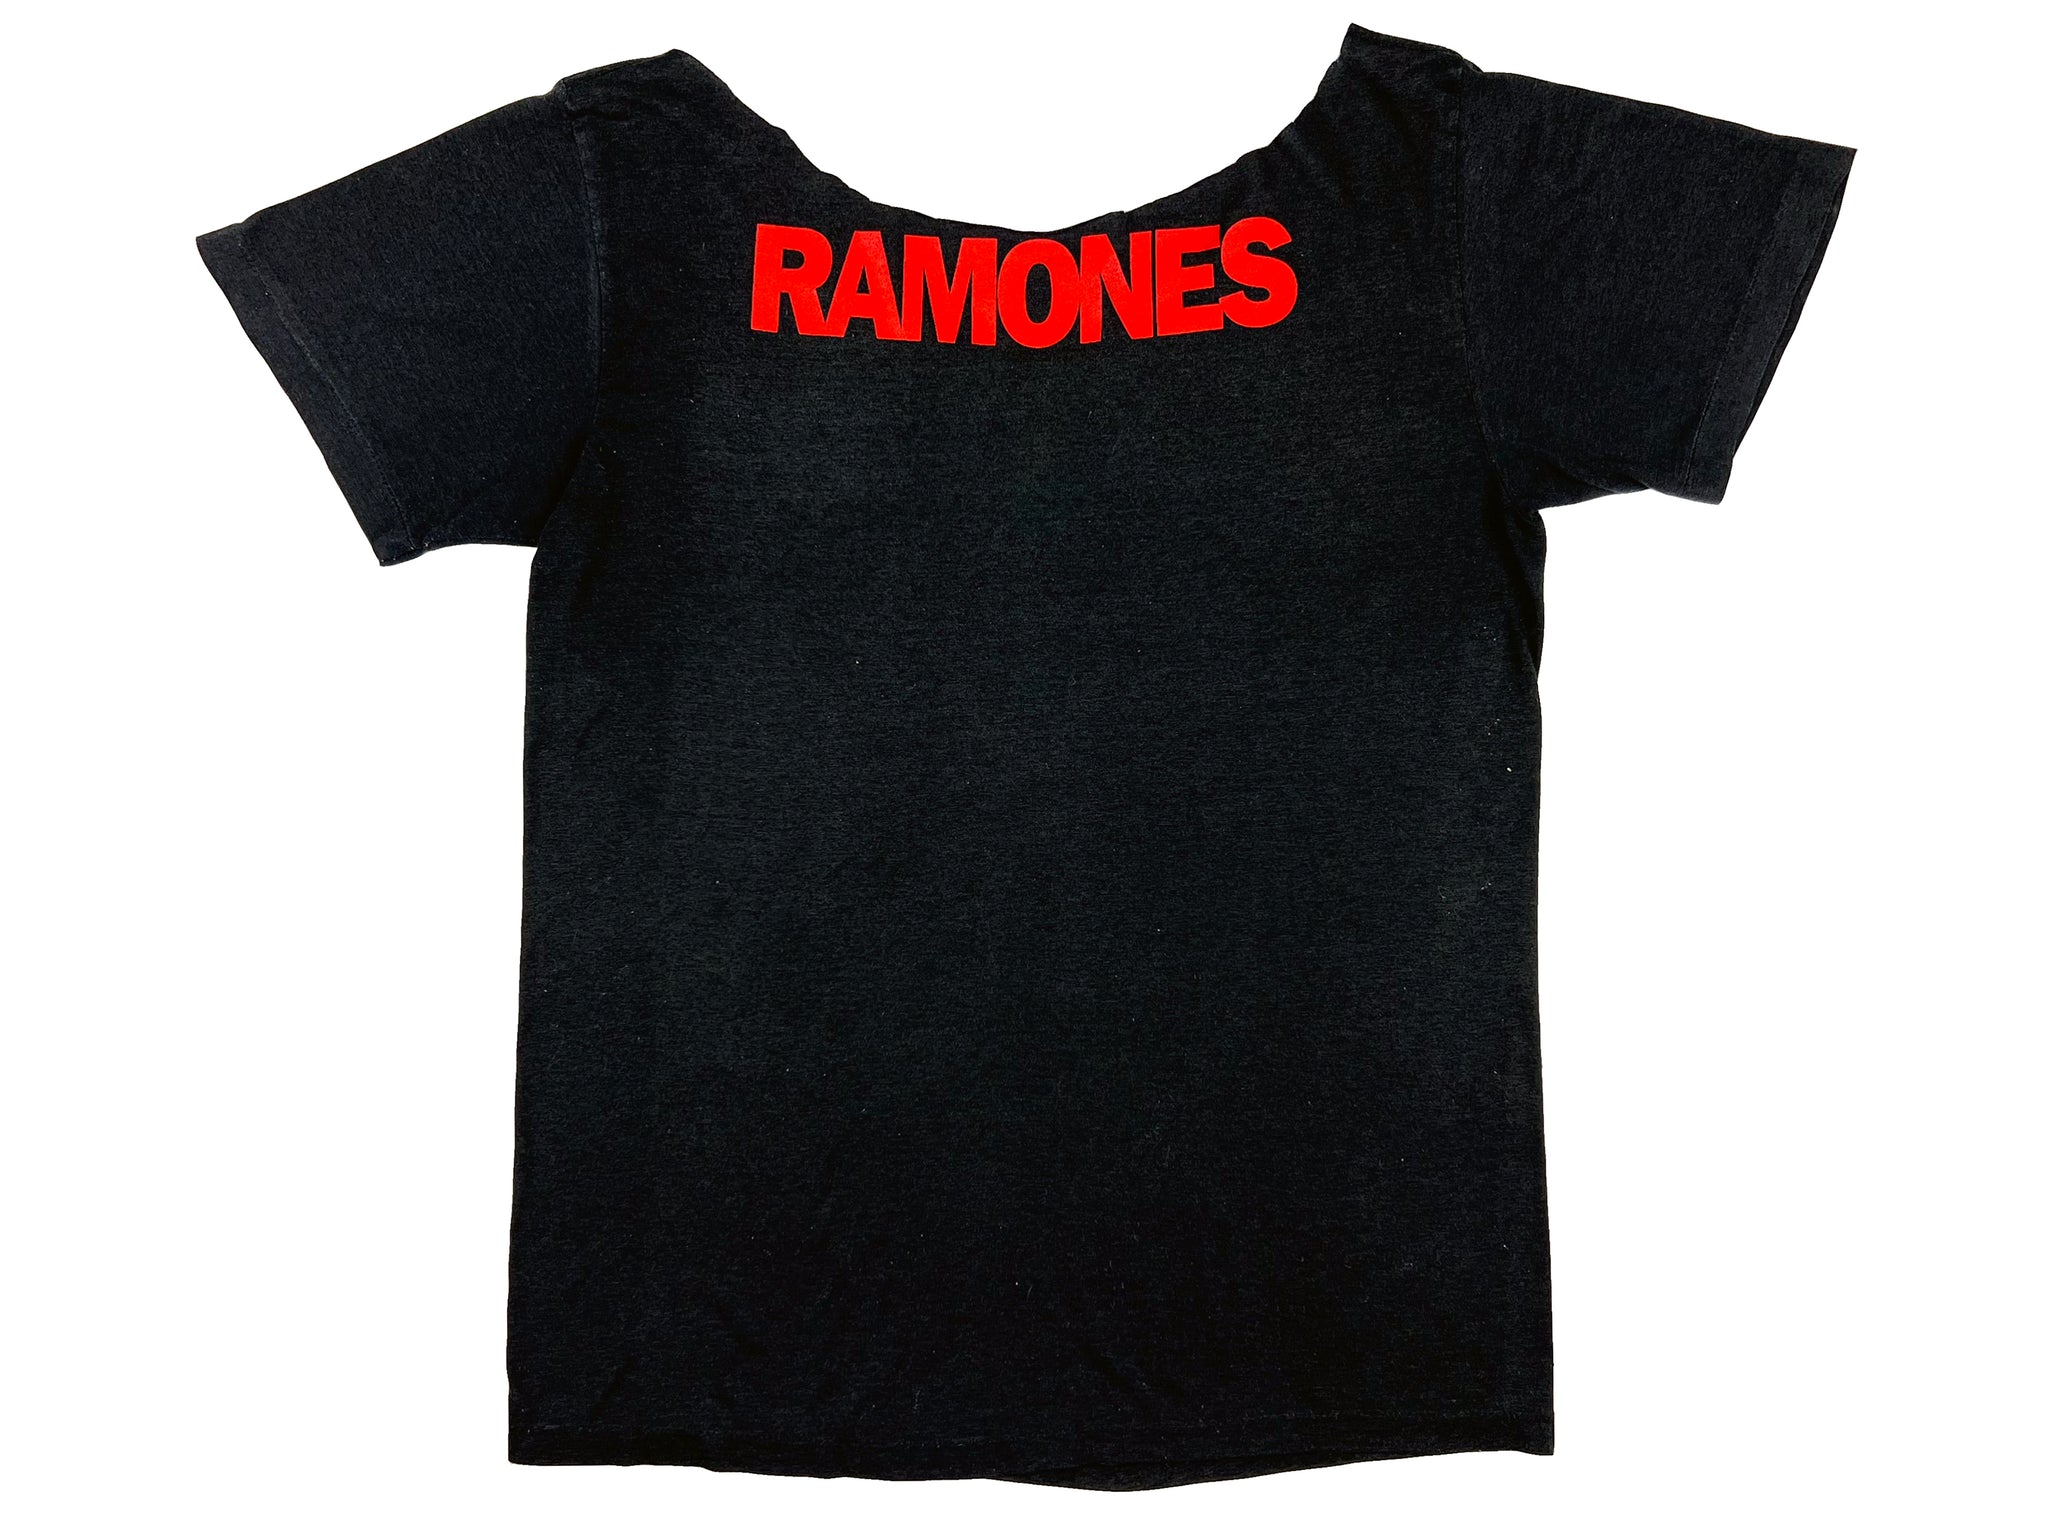 A Tribute to Ramones Album T-Shirt